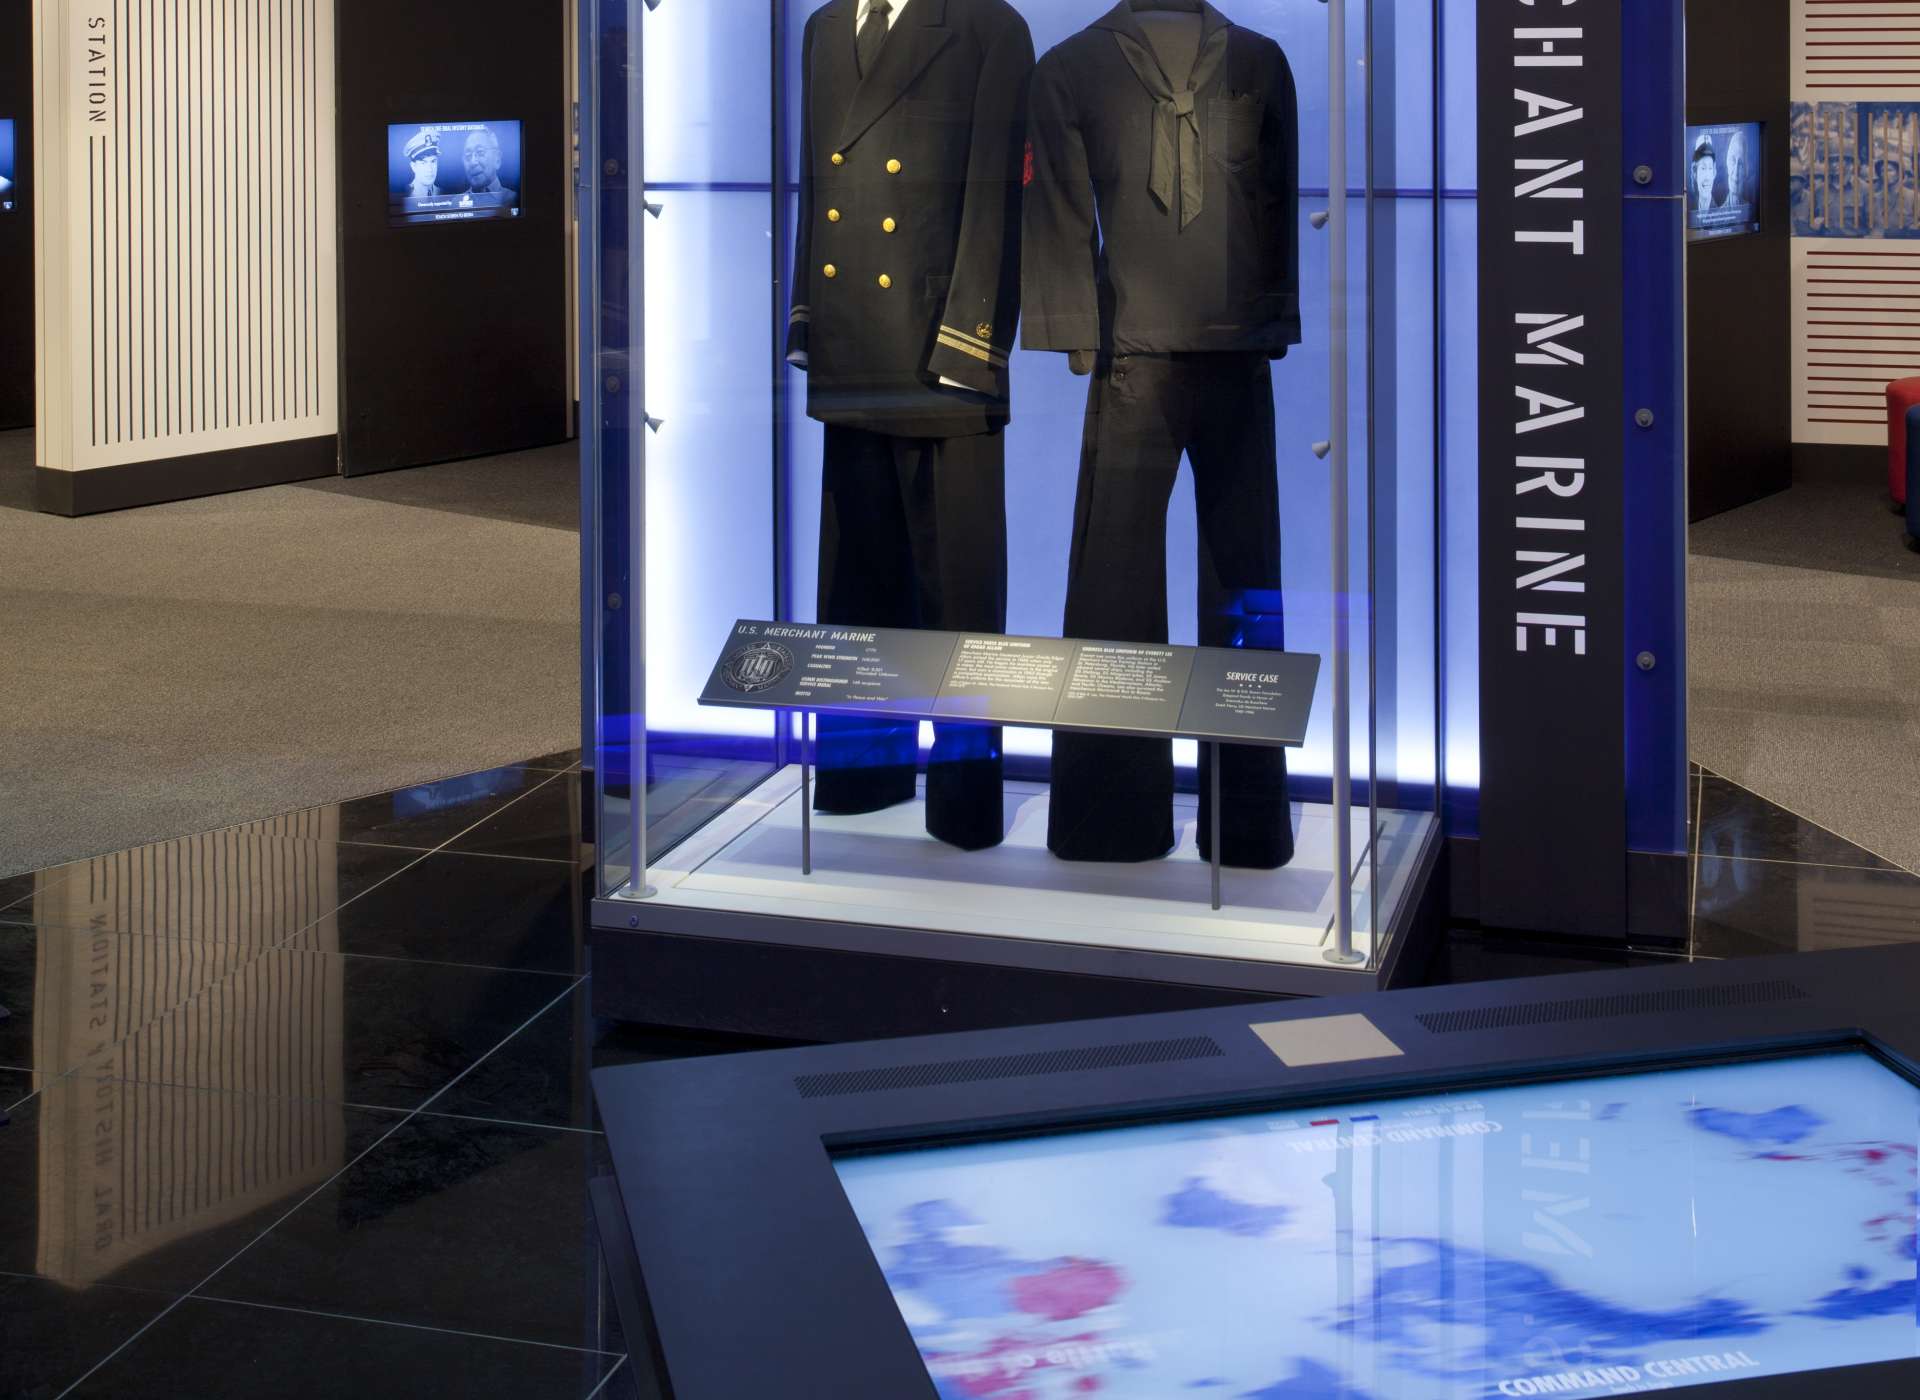 Laborde Services Gallery, US Freedom Pavilion, Merchant Marine uniforms